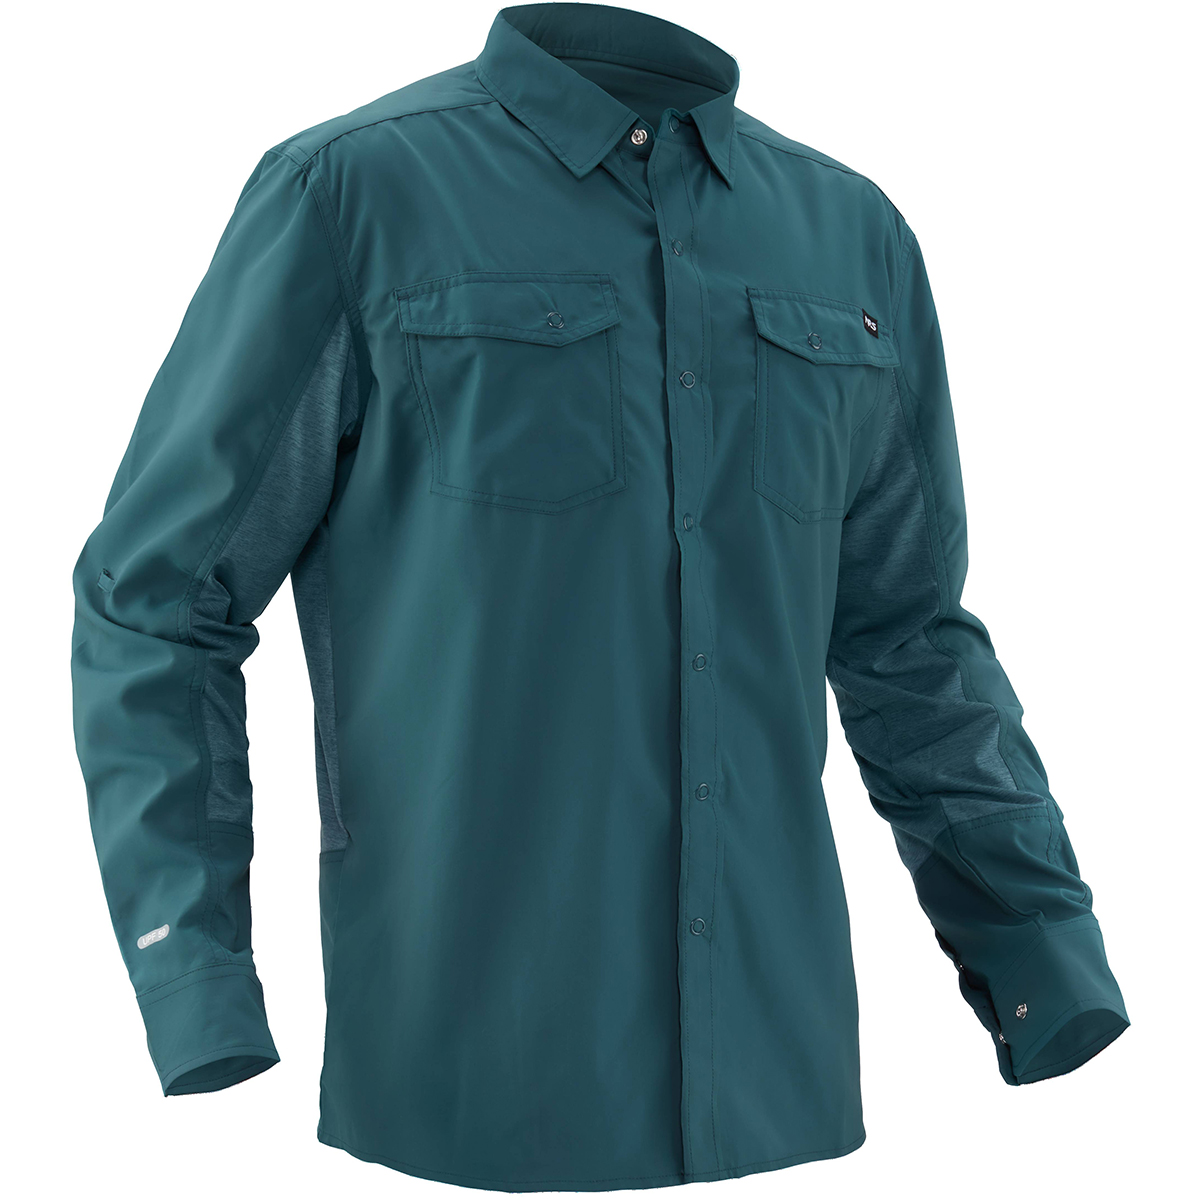 NRS Men's Long-Sleeve Guide Shirt - Size L